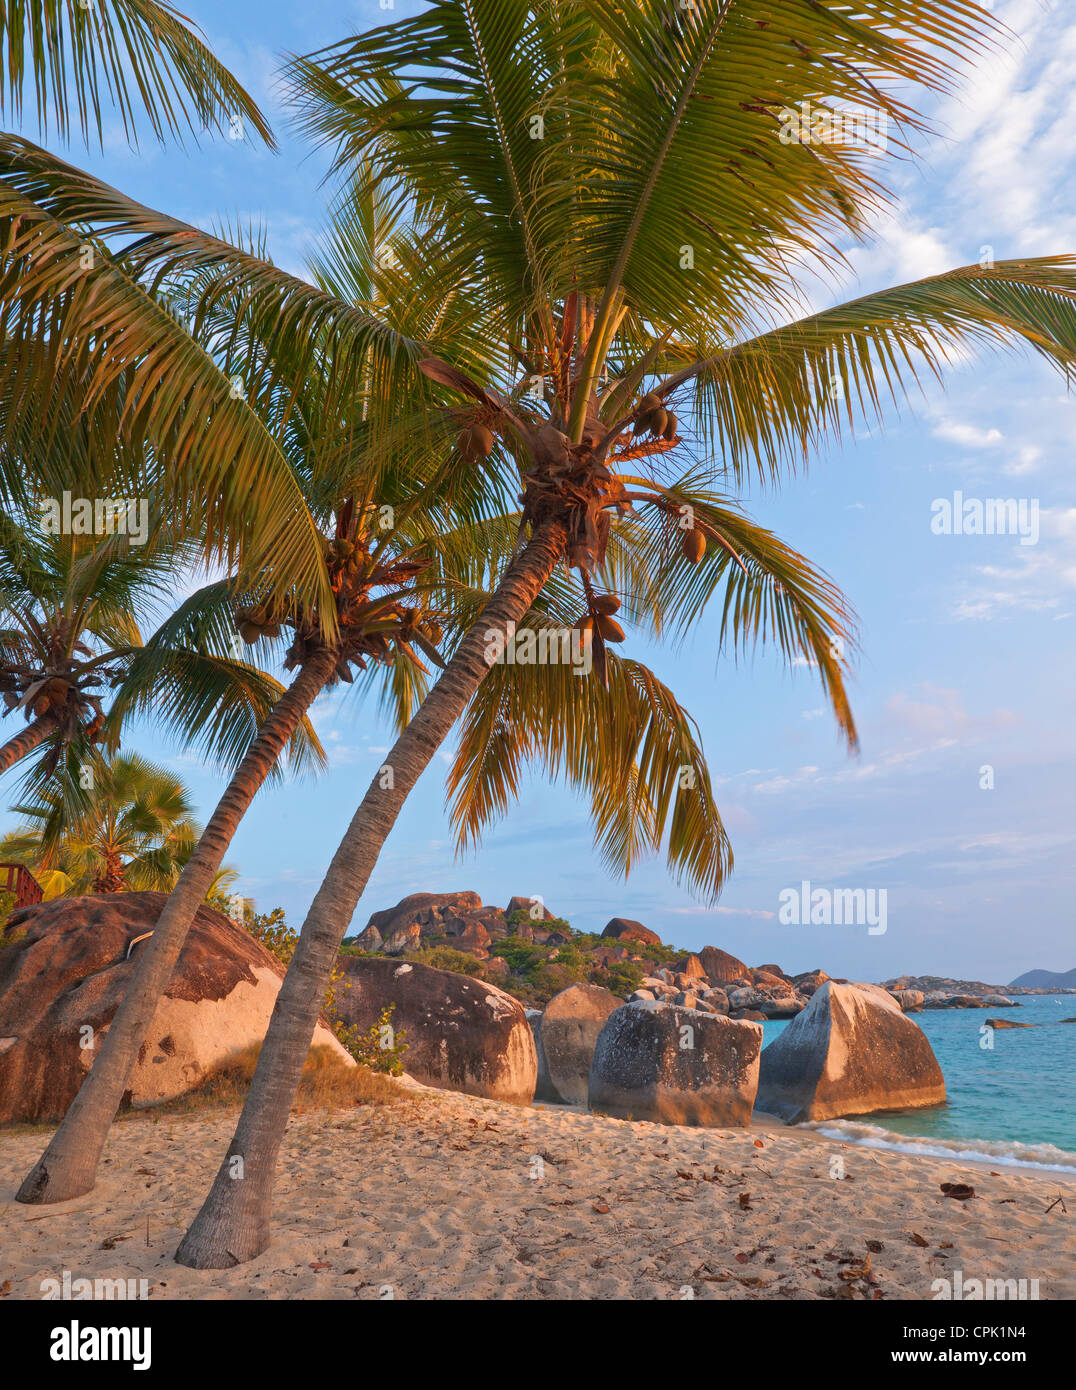 Virgin Gorda, British Virgin Islands, Caribbean Palm trees lean out towards the beach on Spring Bay, Spring Bay National Park Stock Photo